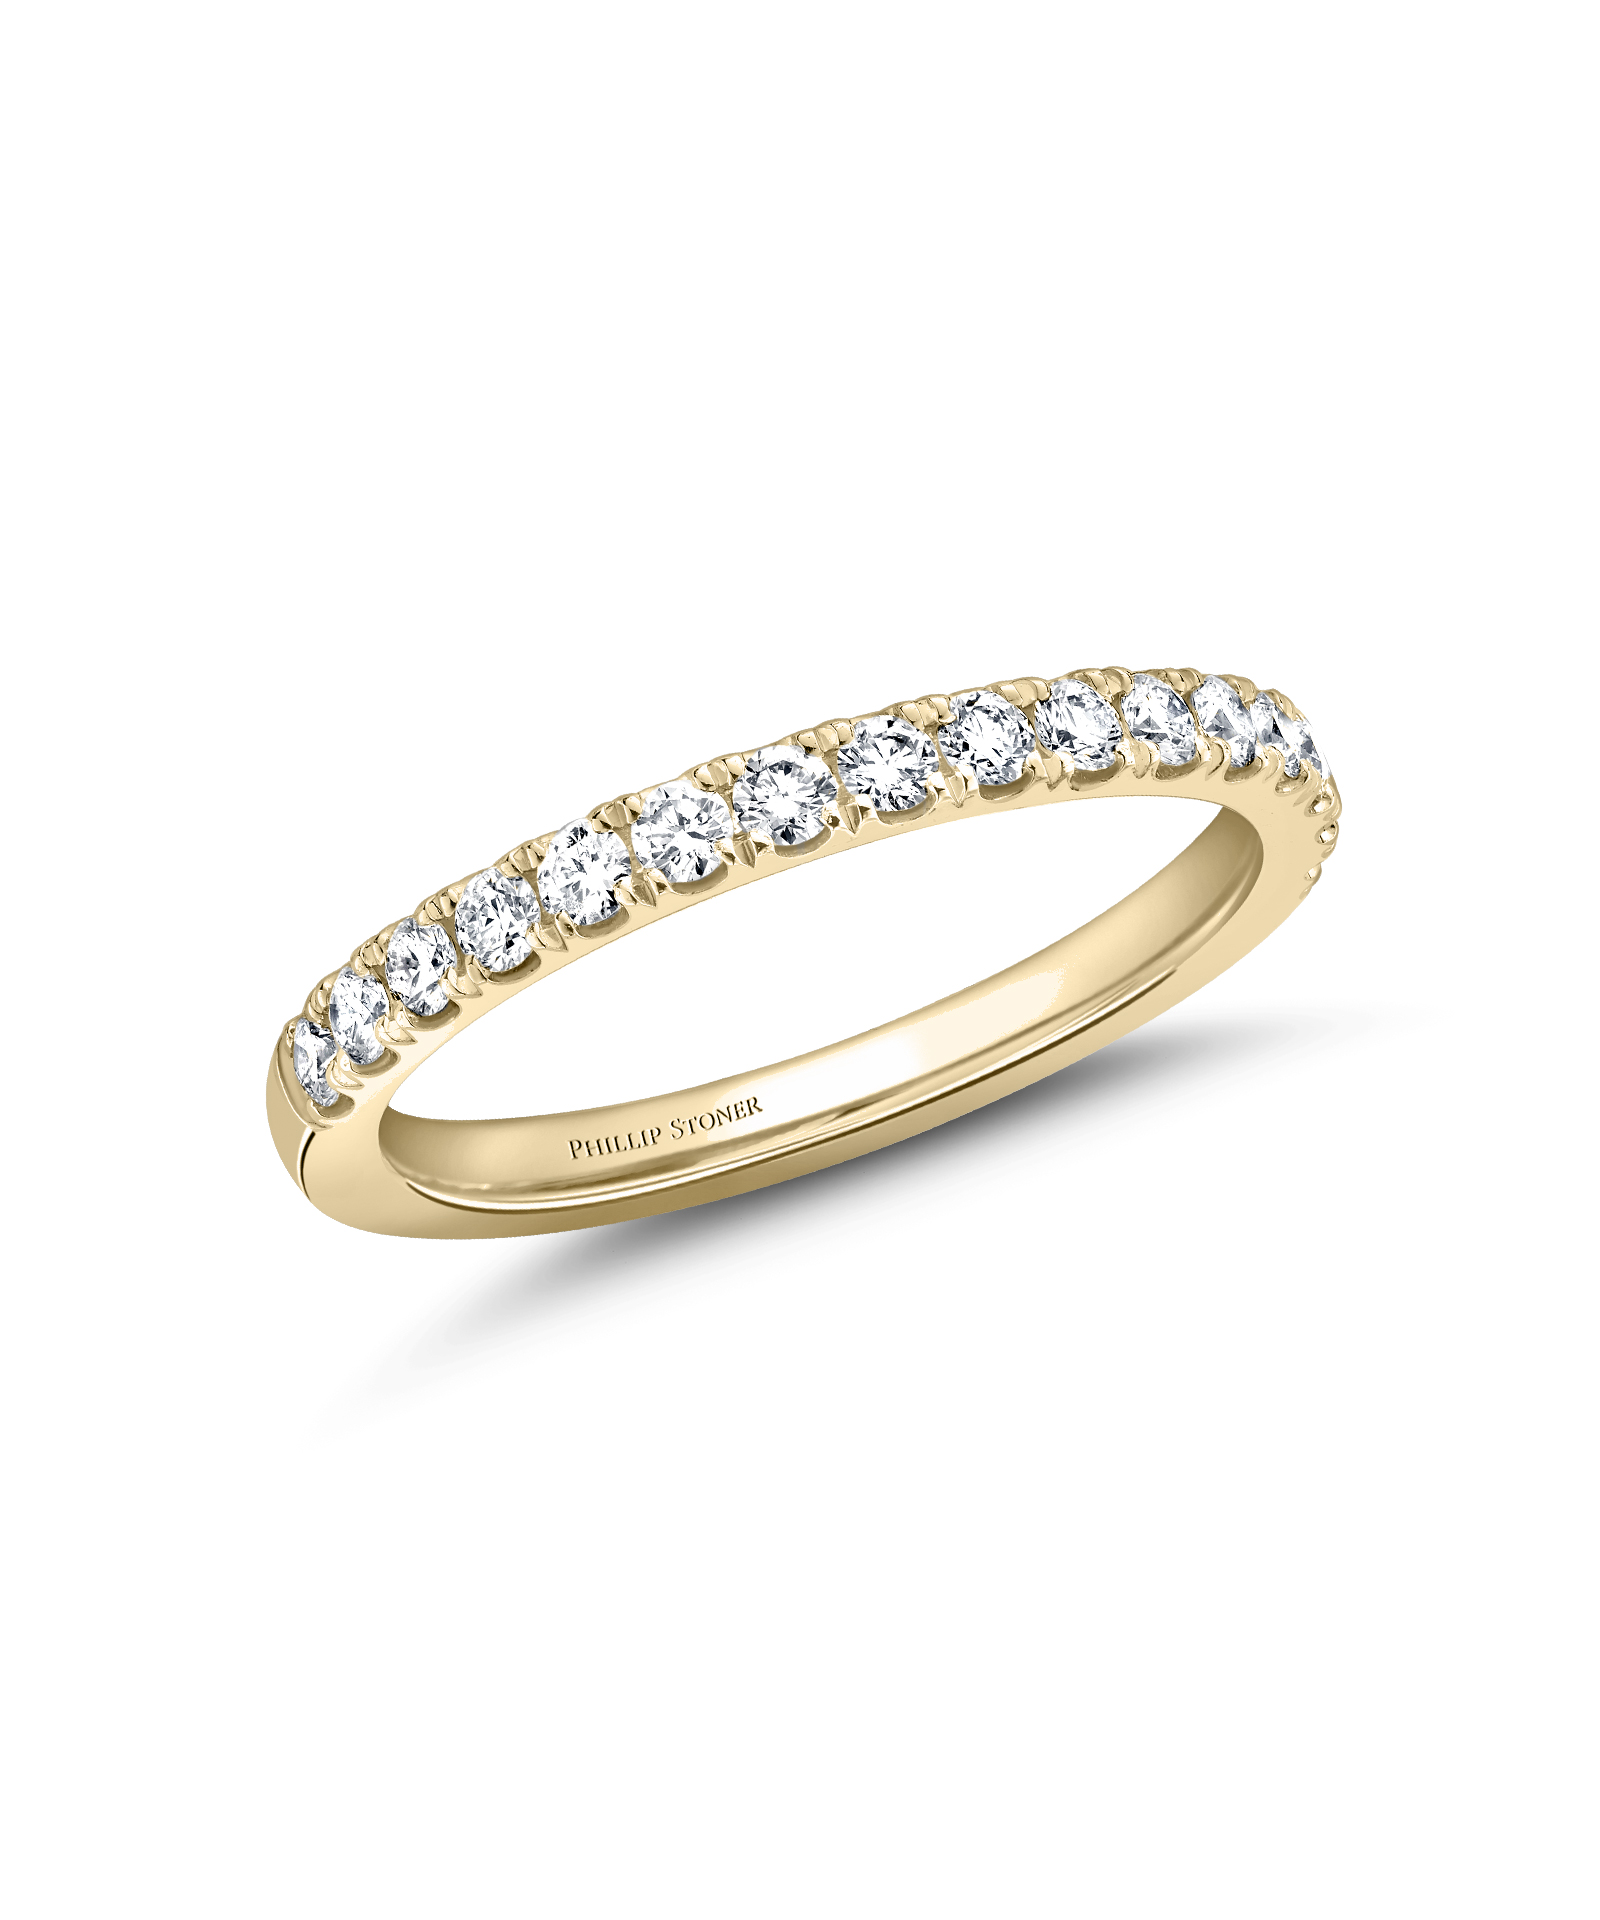 18ct Yellow Gold 0.36ct Thea Diamond Wedding Ring - Phillip Stoner The Jeweller